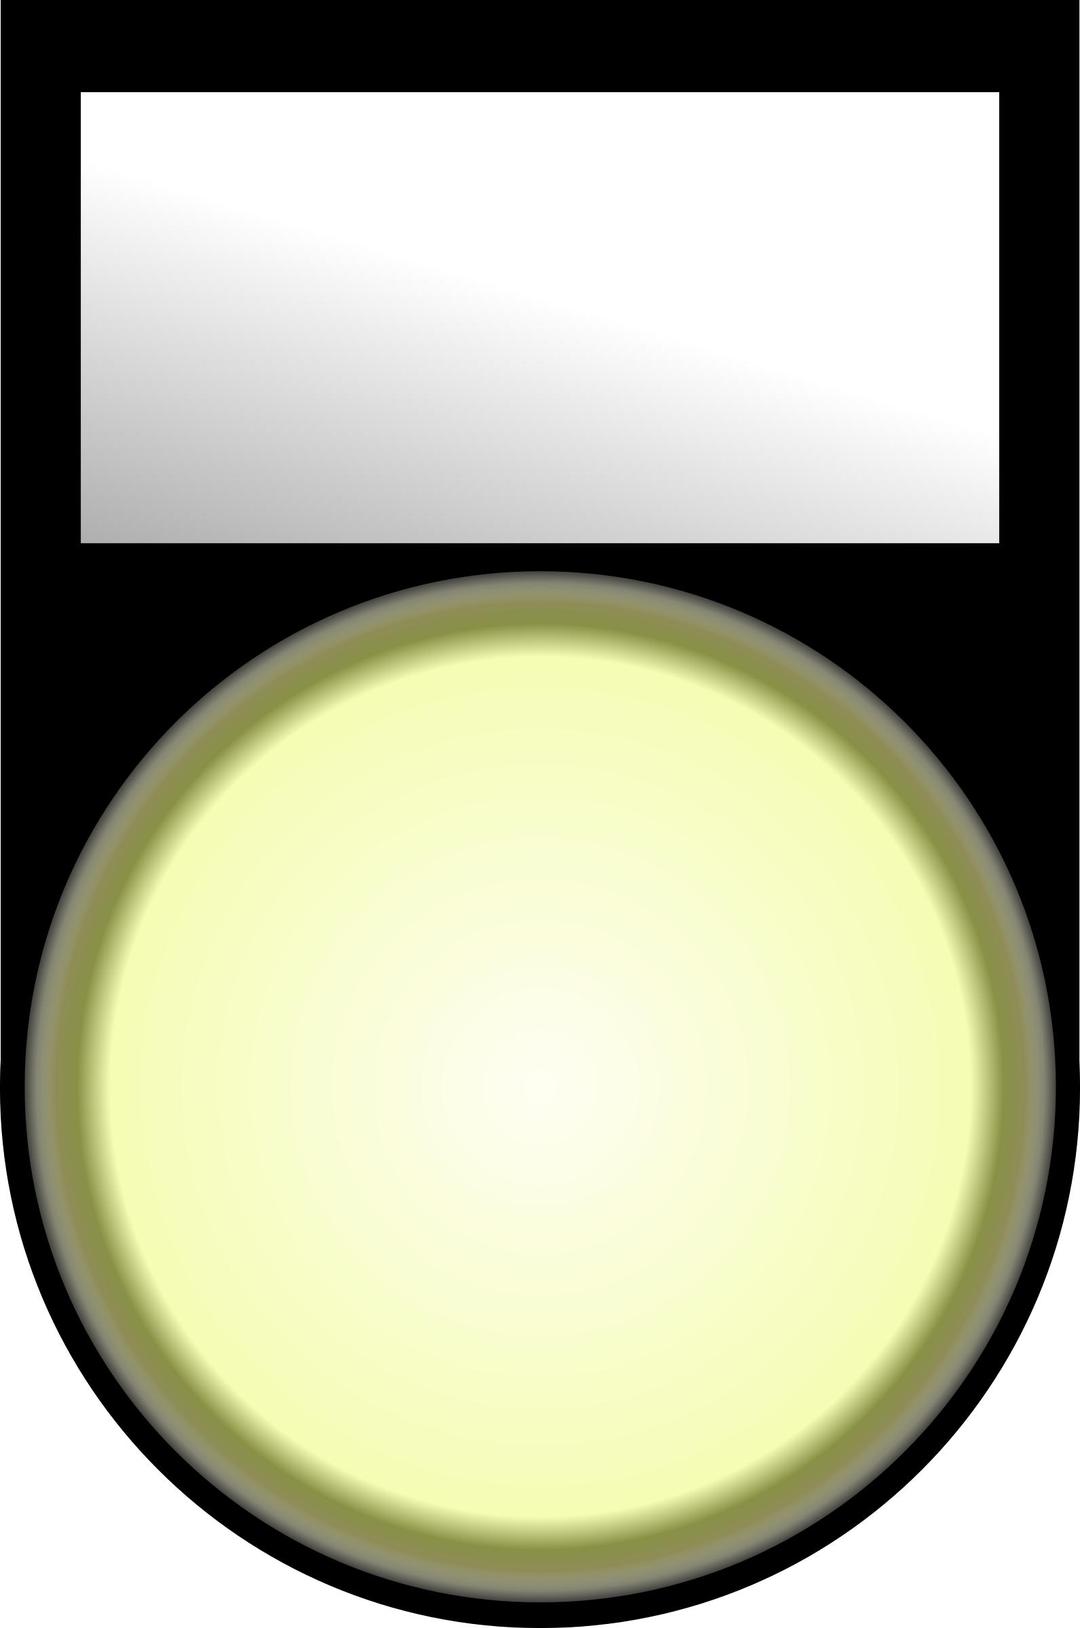 Voyant Blanc Allume - White Light ON png transparent